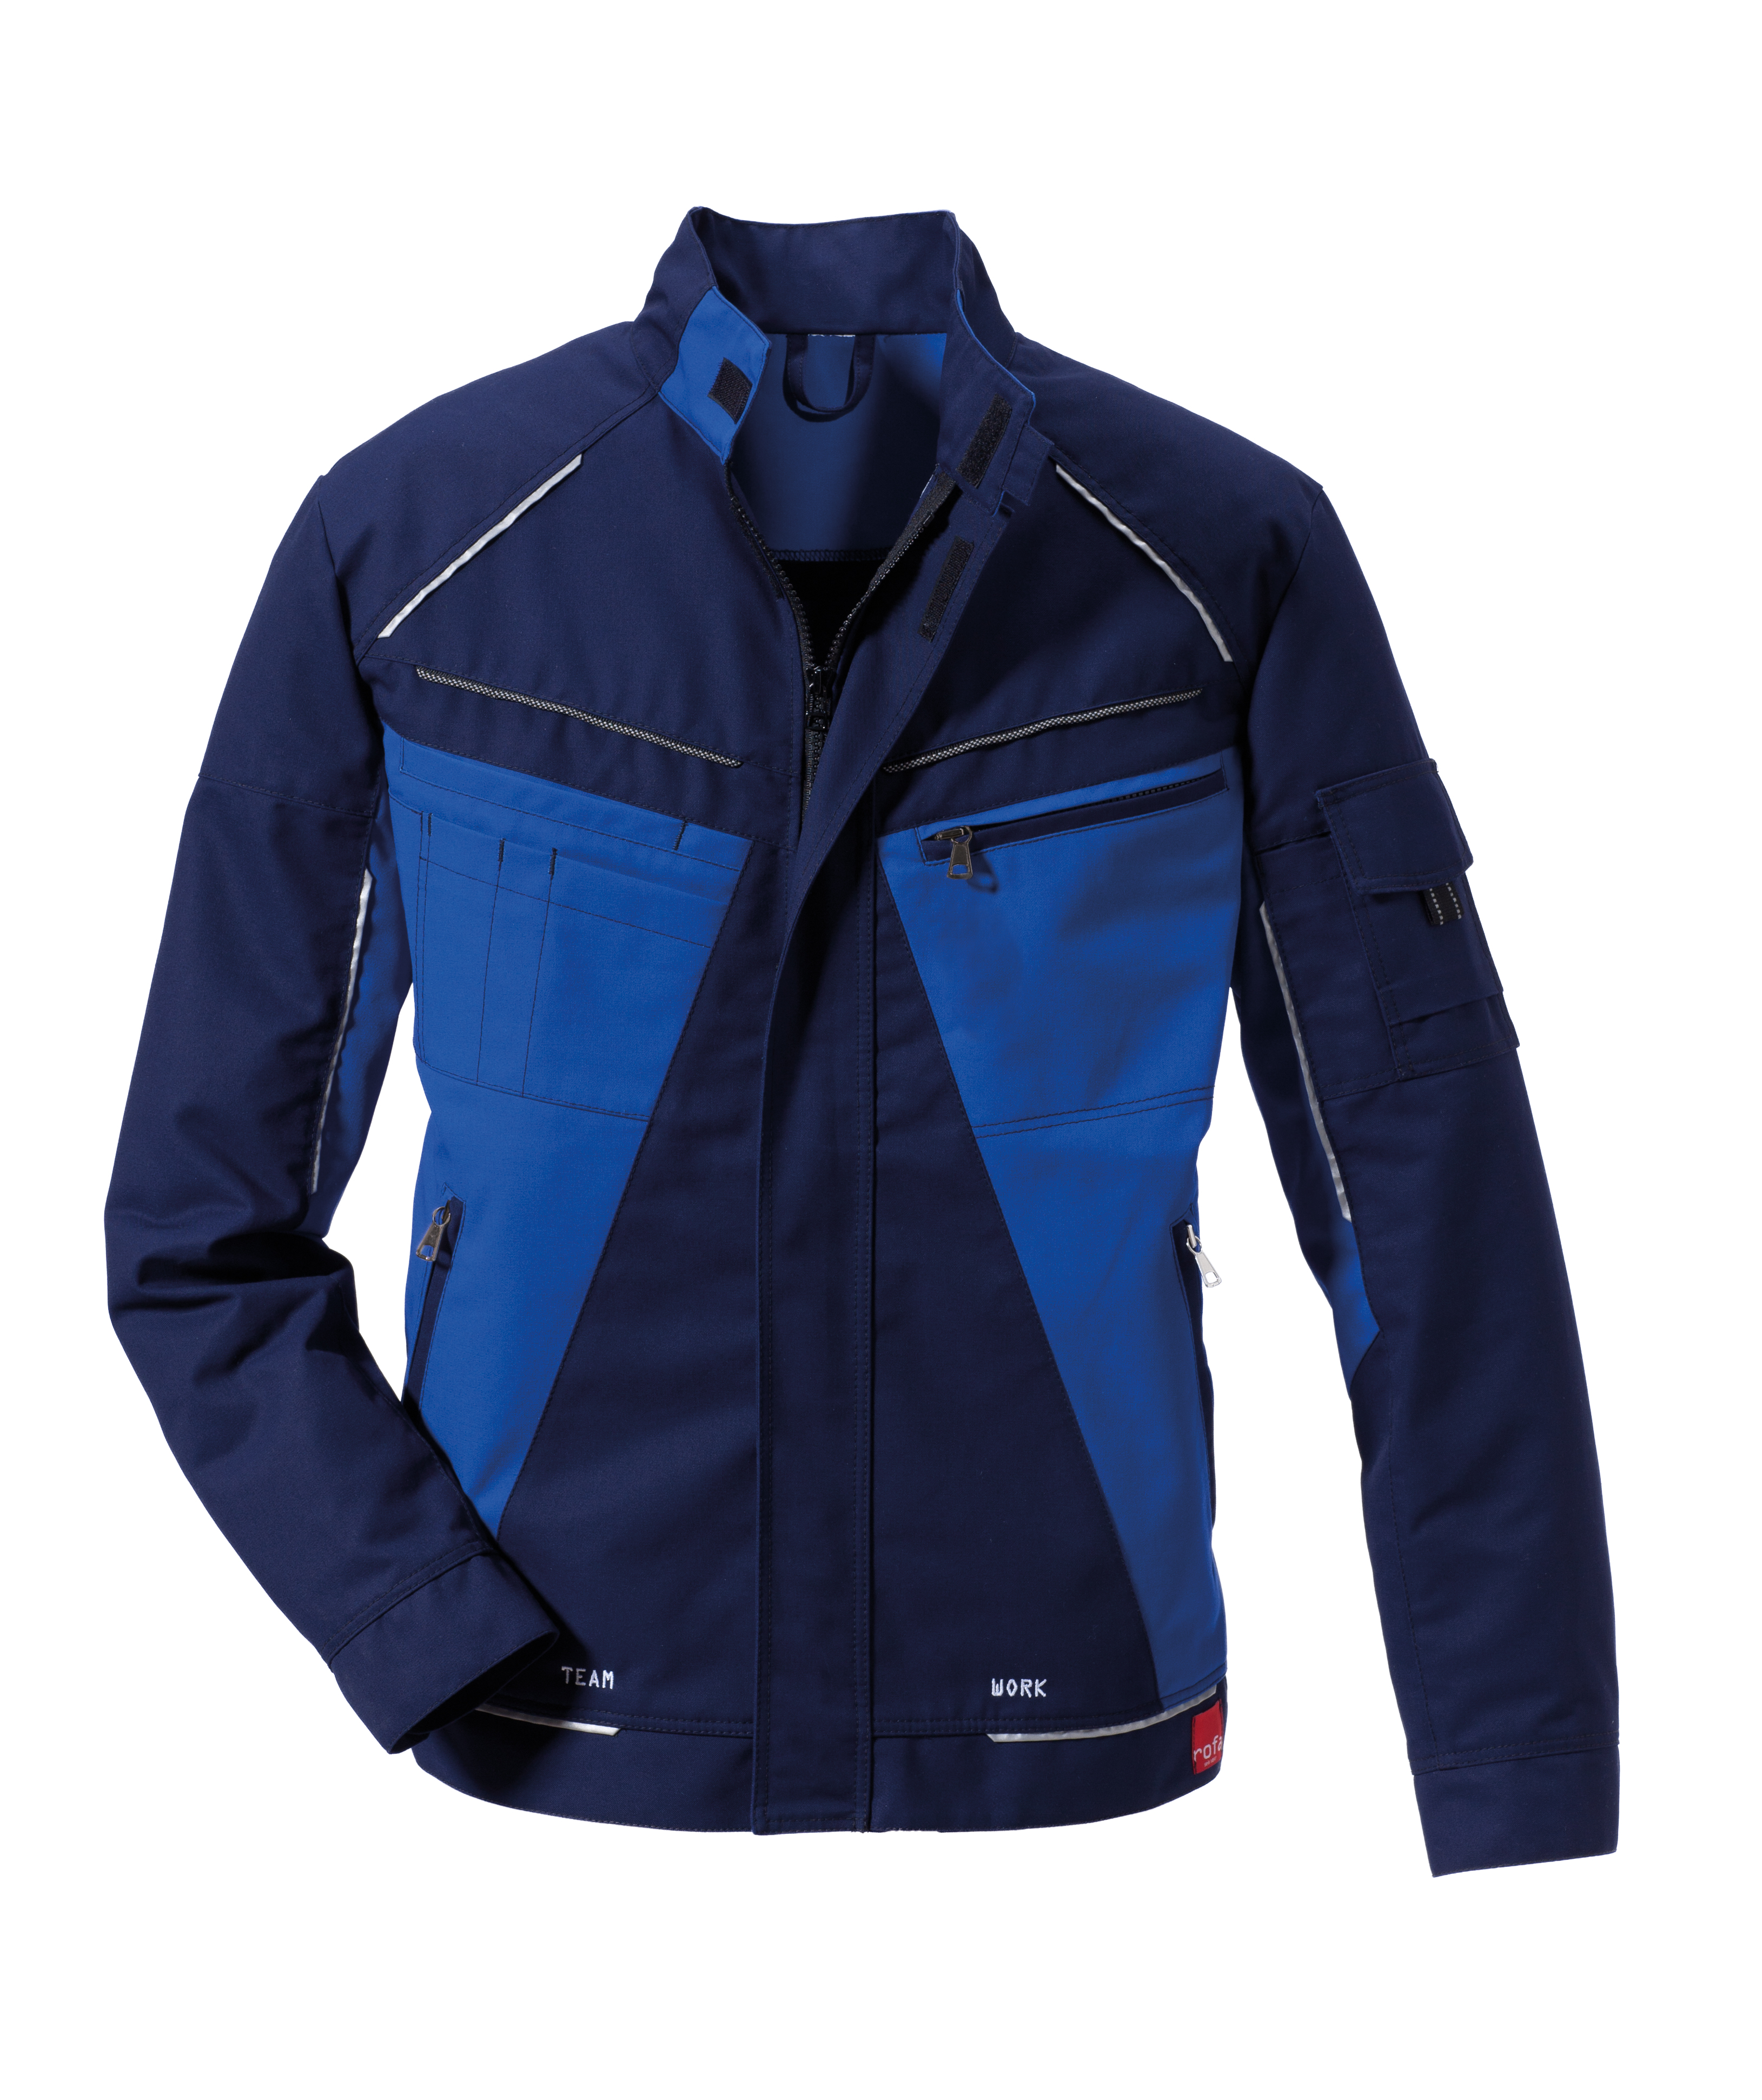 ROFA-Workwear, Arbeits-Berufs-Jacke, Teamwork, ca. 295 g/m², marine-kornblau